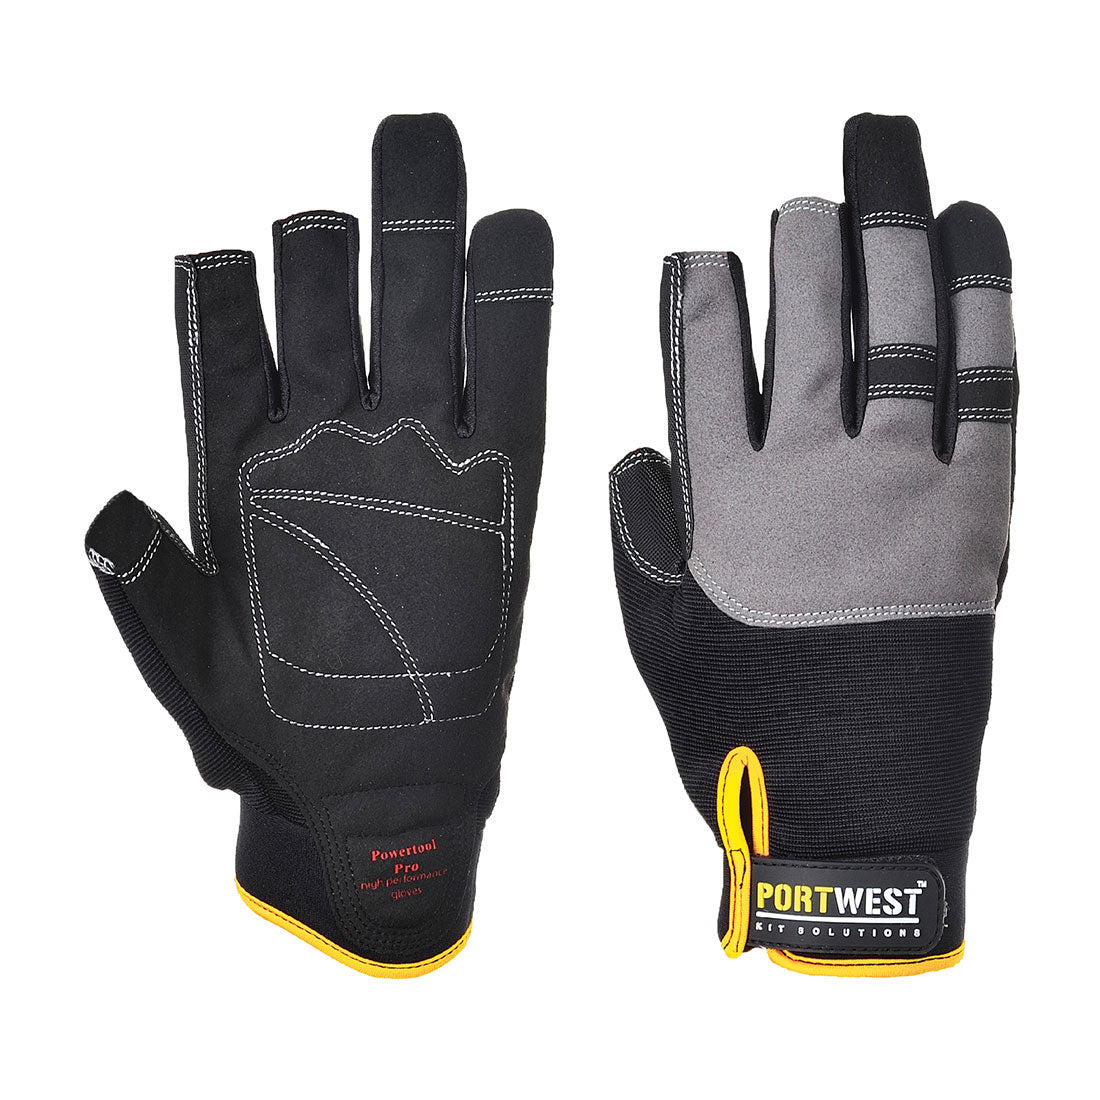 Portwest Powertool Pro Glove A740 - New England Safety Supply